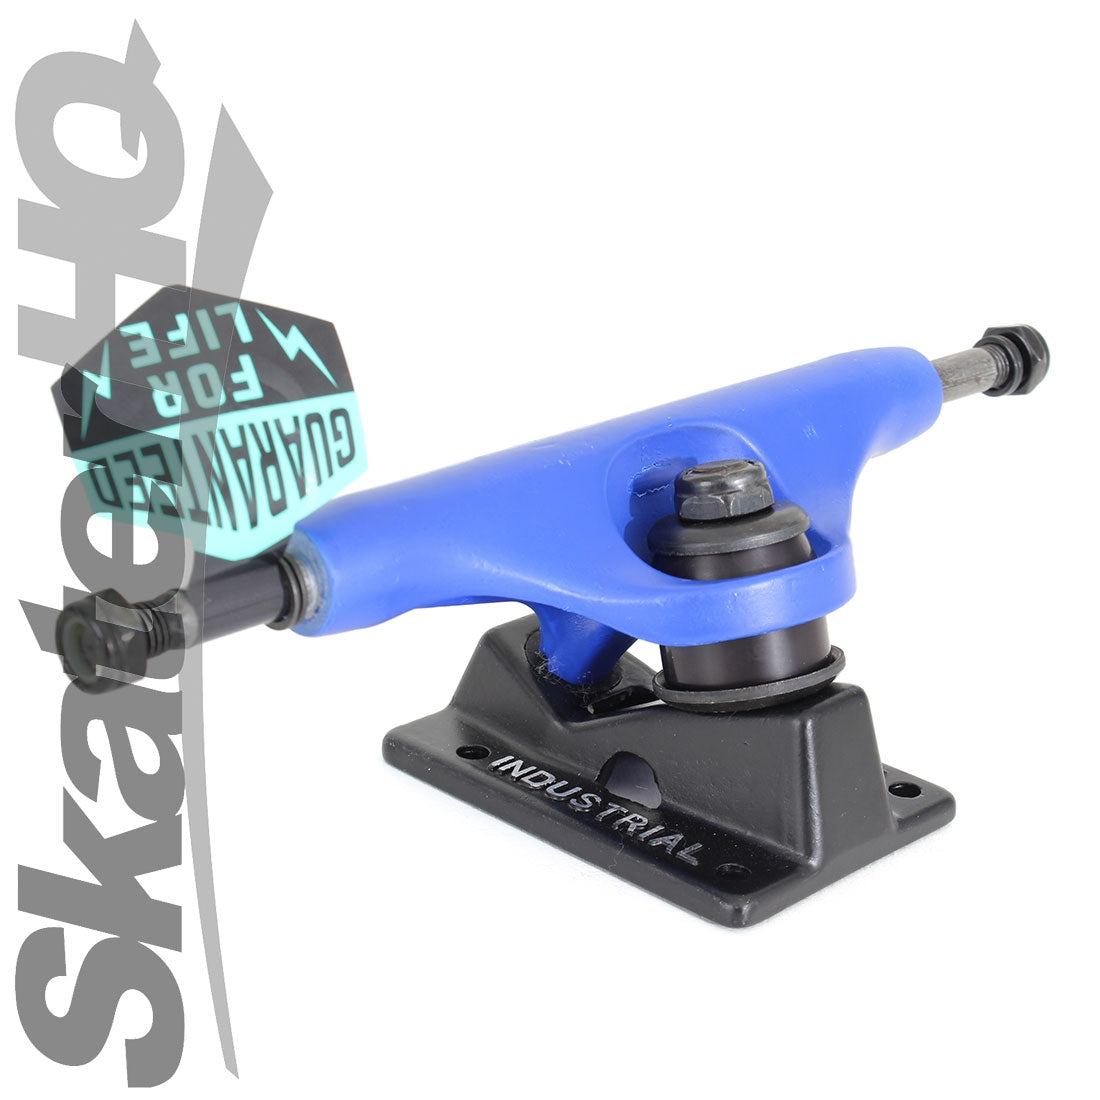 Industrial 5.25 Blue/Black PAIR Skateboard Trucks